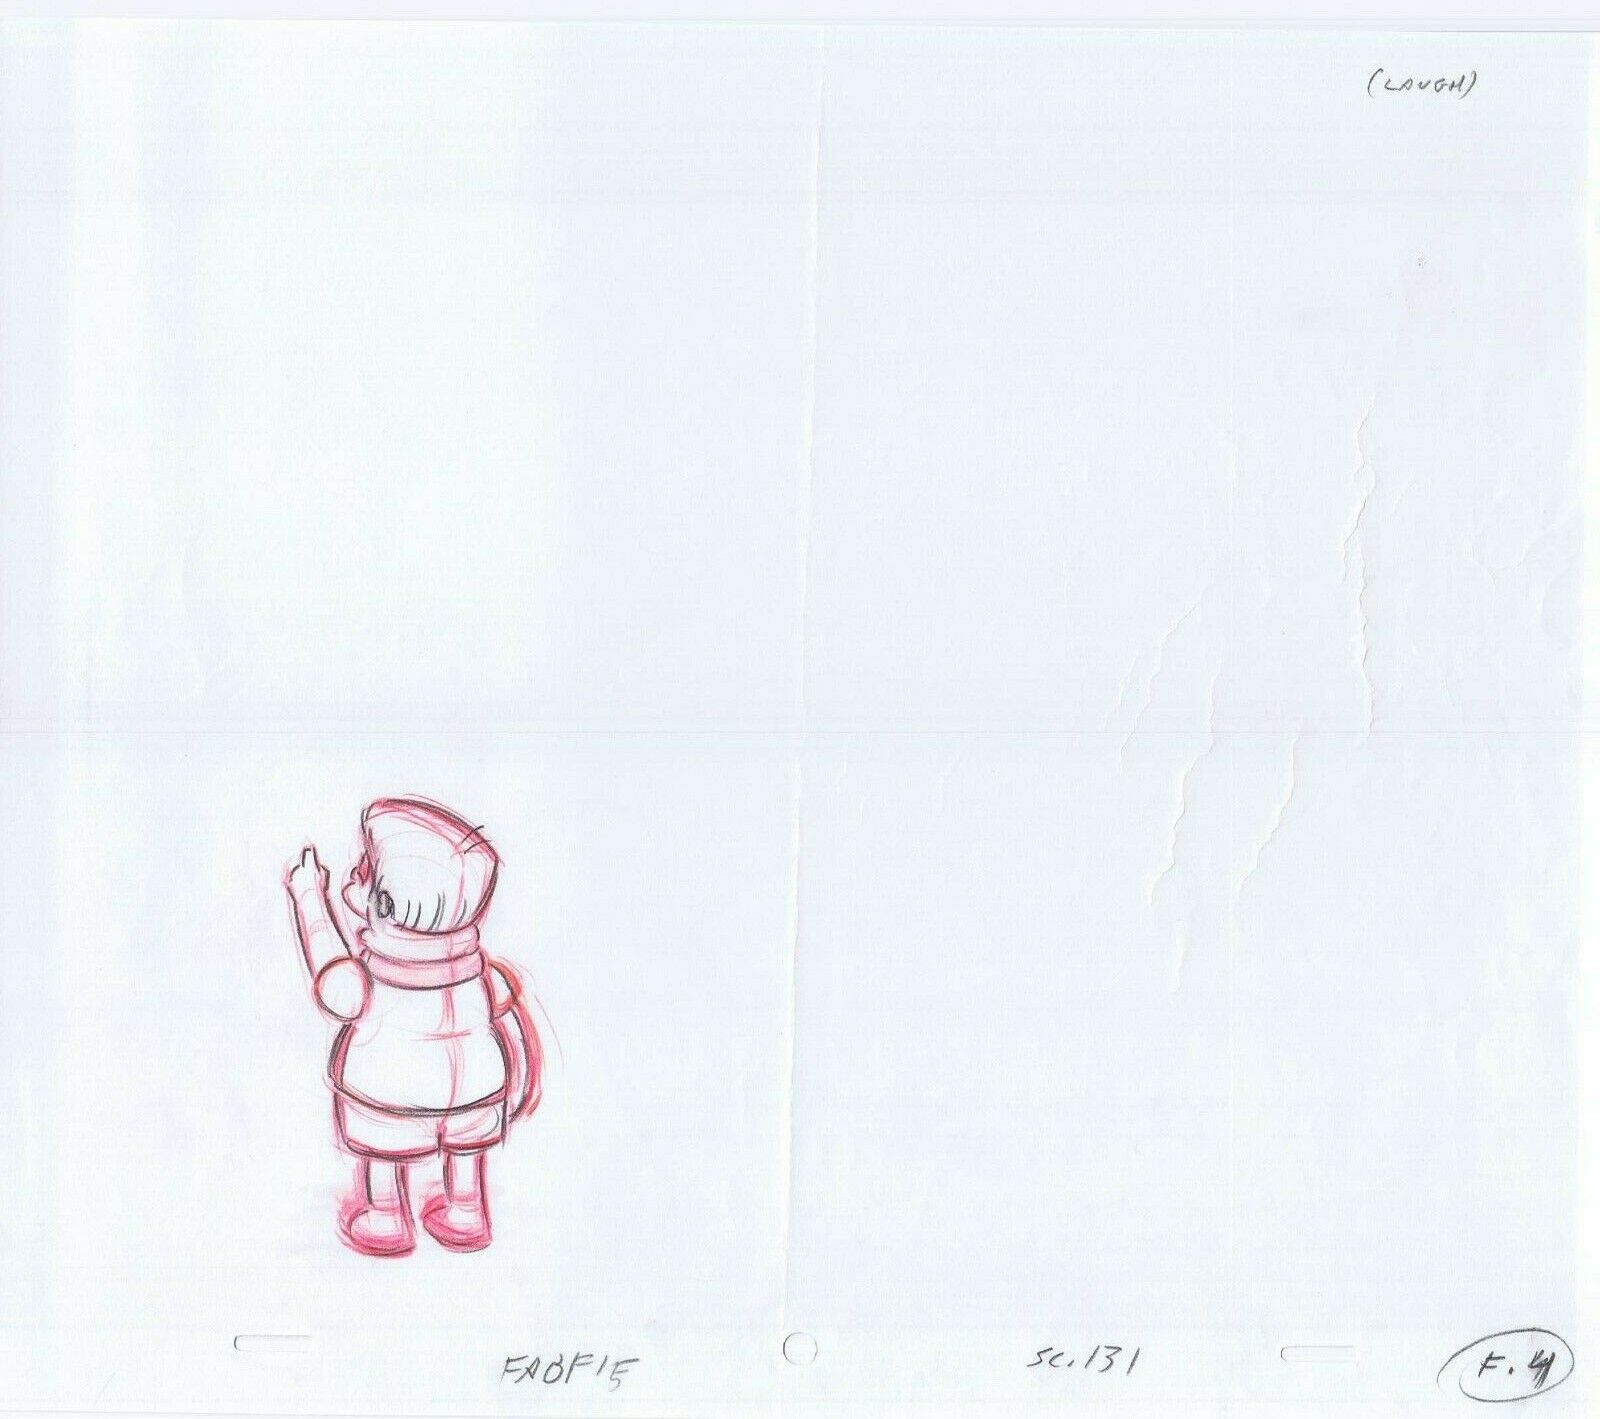 Simpsons Martin Original Art Animation Production Pencils FABF15 SC-131 F-4